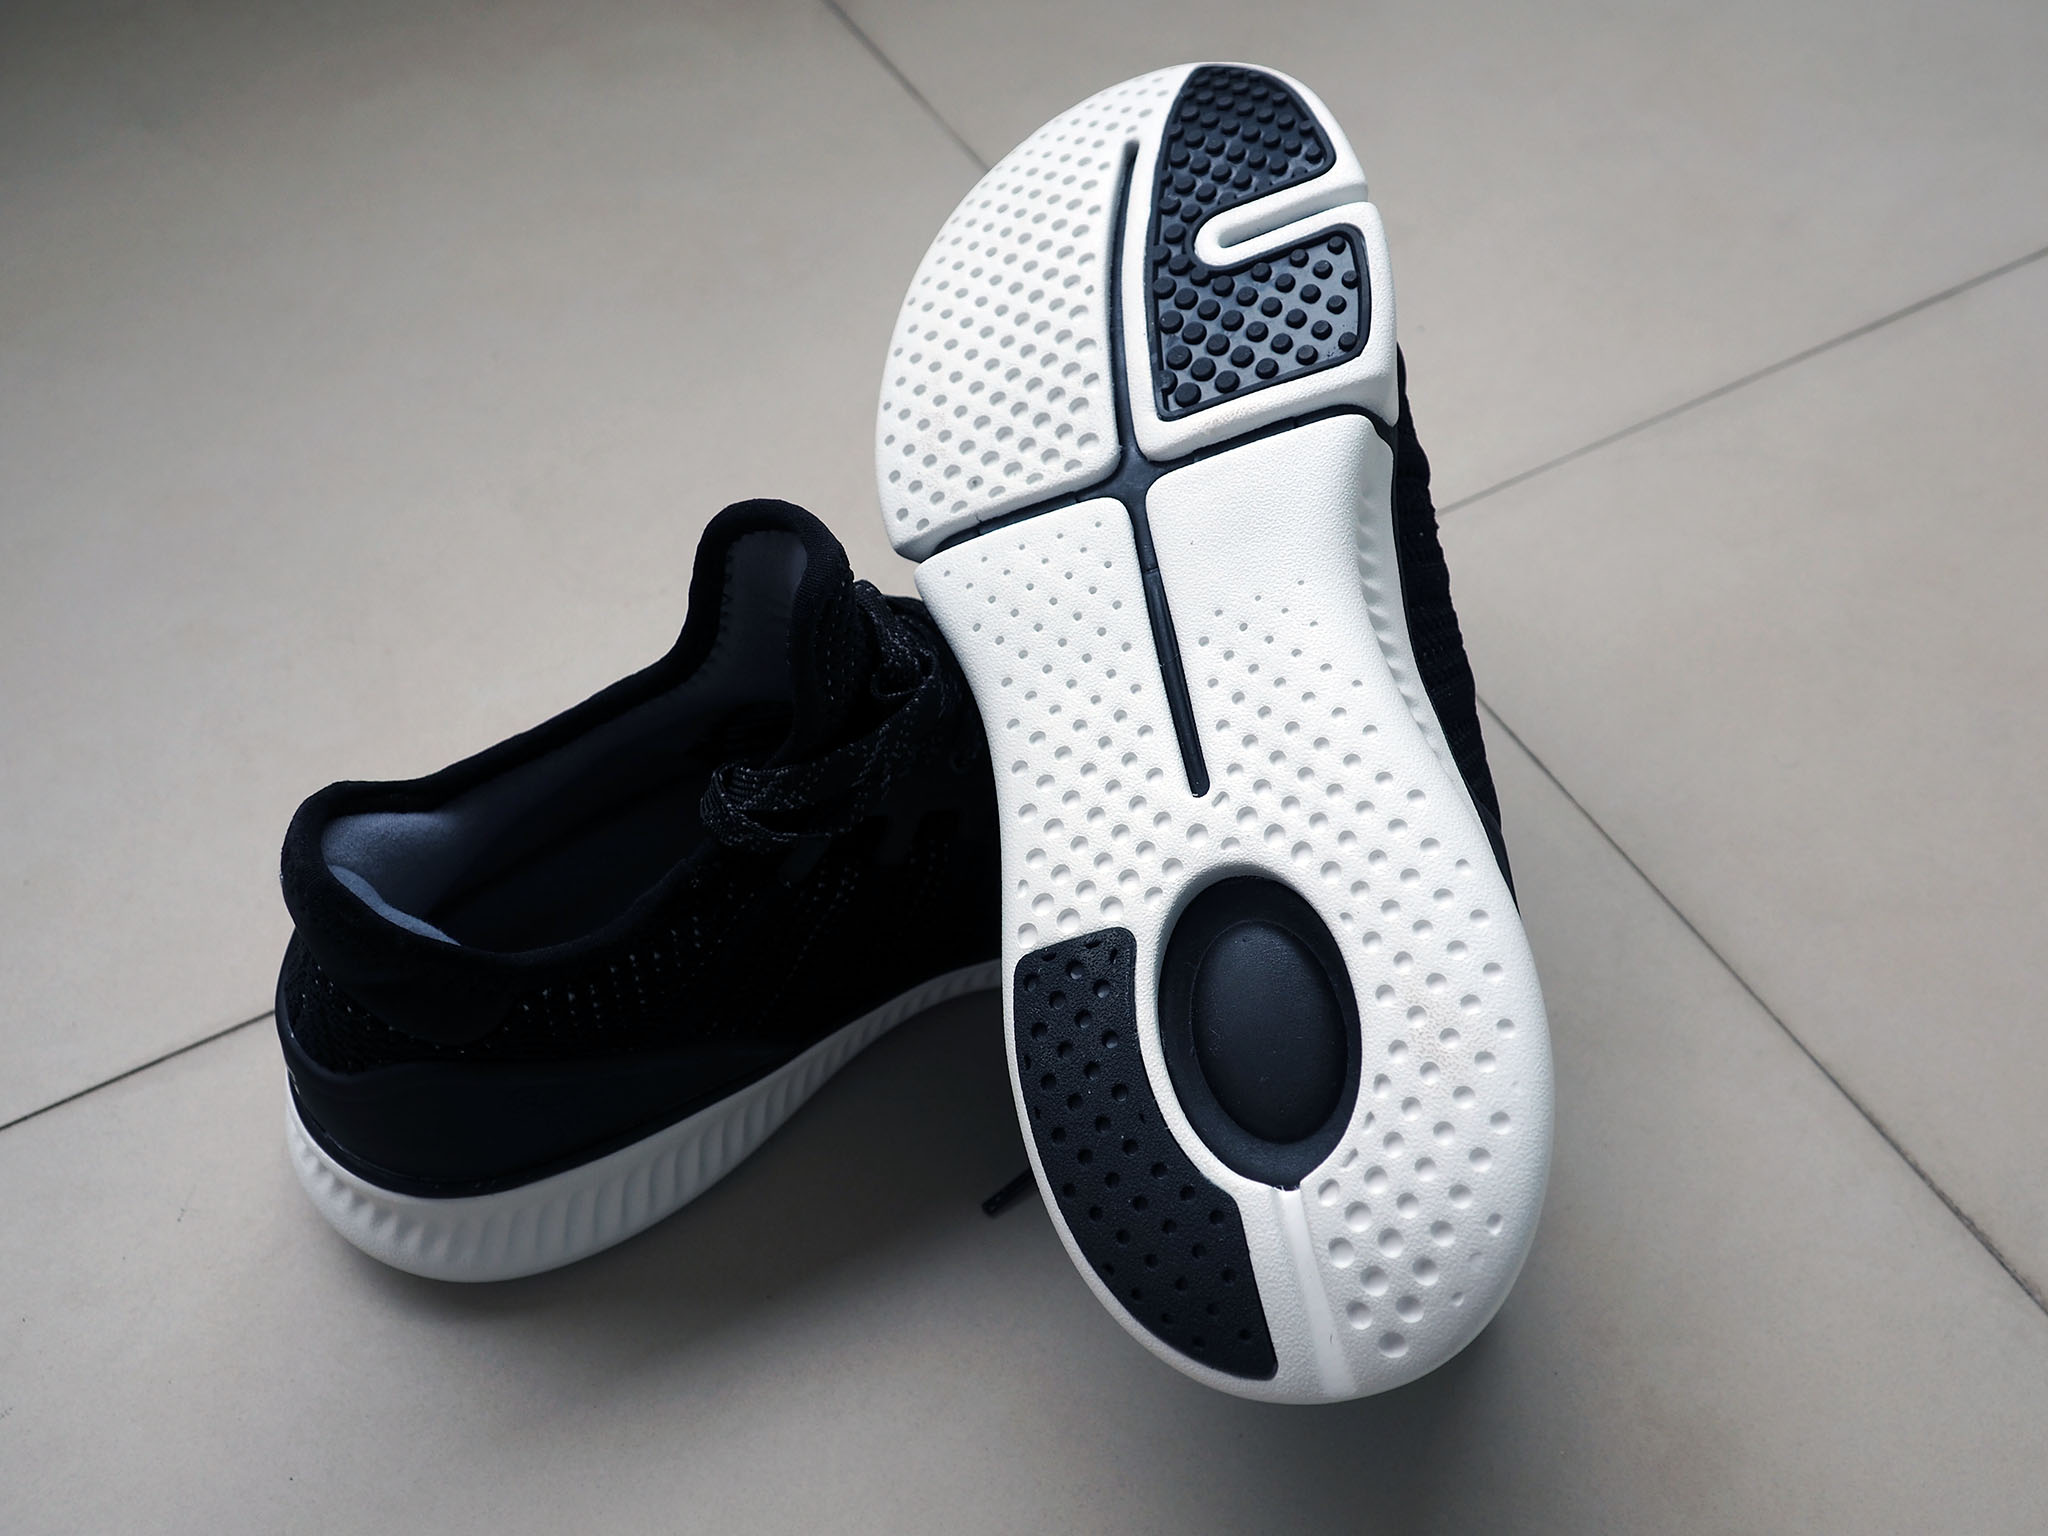 xiaomi smart shoes price